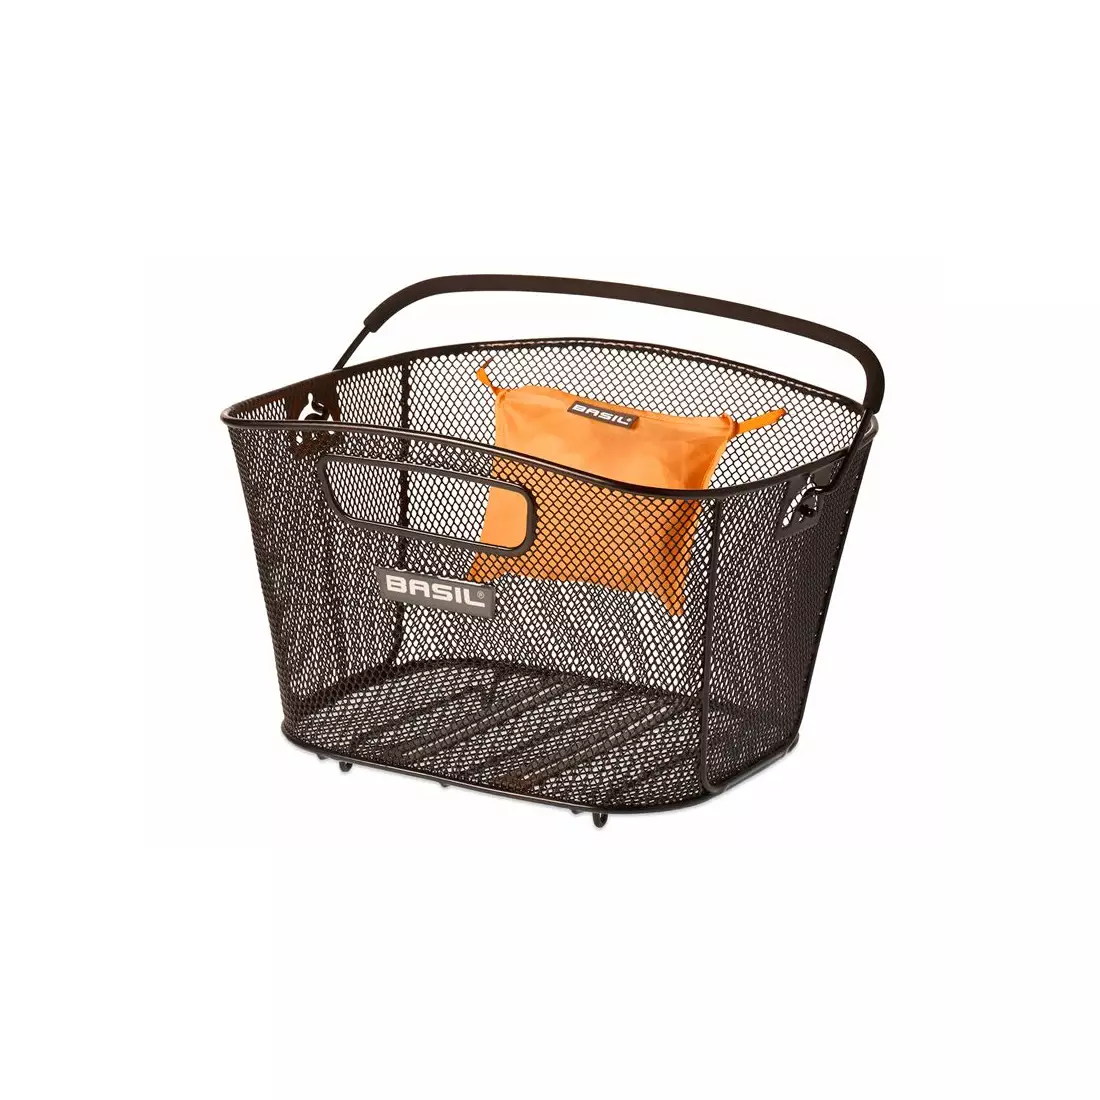 Shopping bag BASIL KEEP SHOPPER orange neon BAS-50453